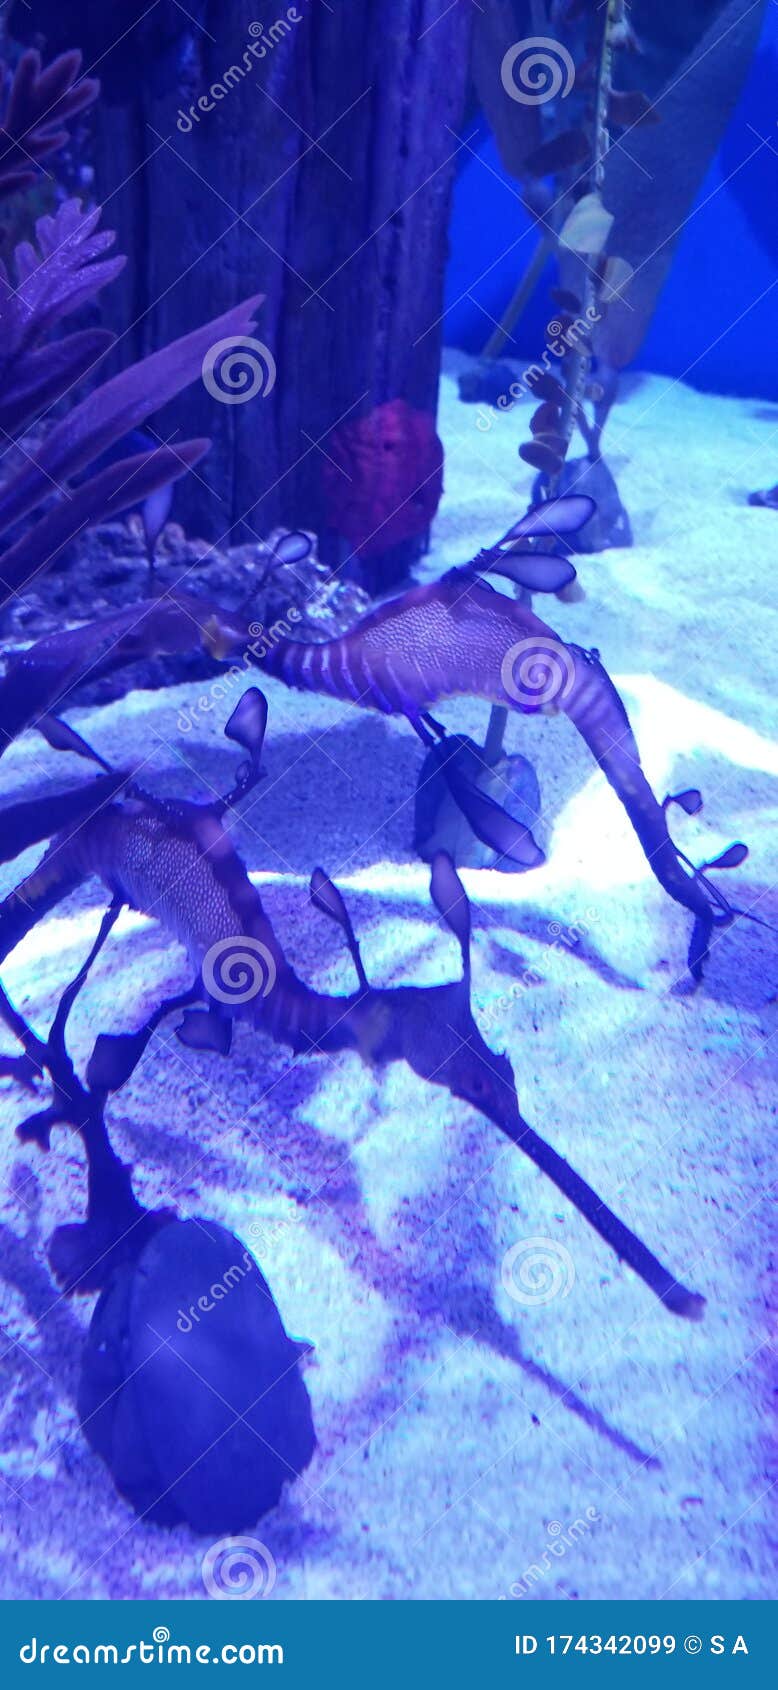 seahorse camoflauge ornate